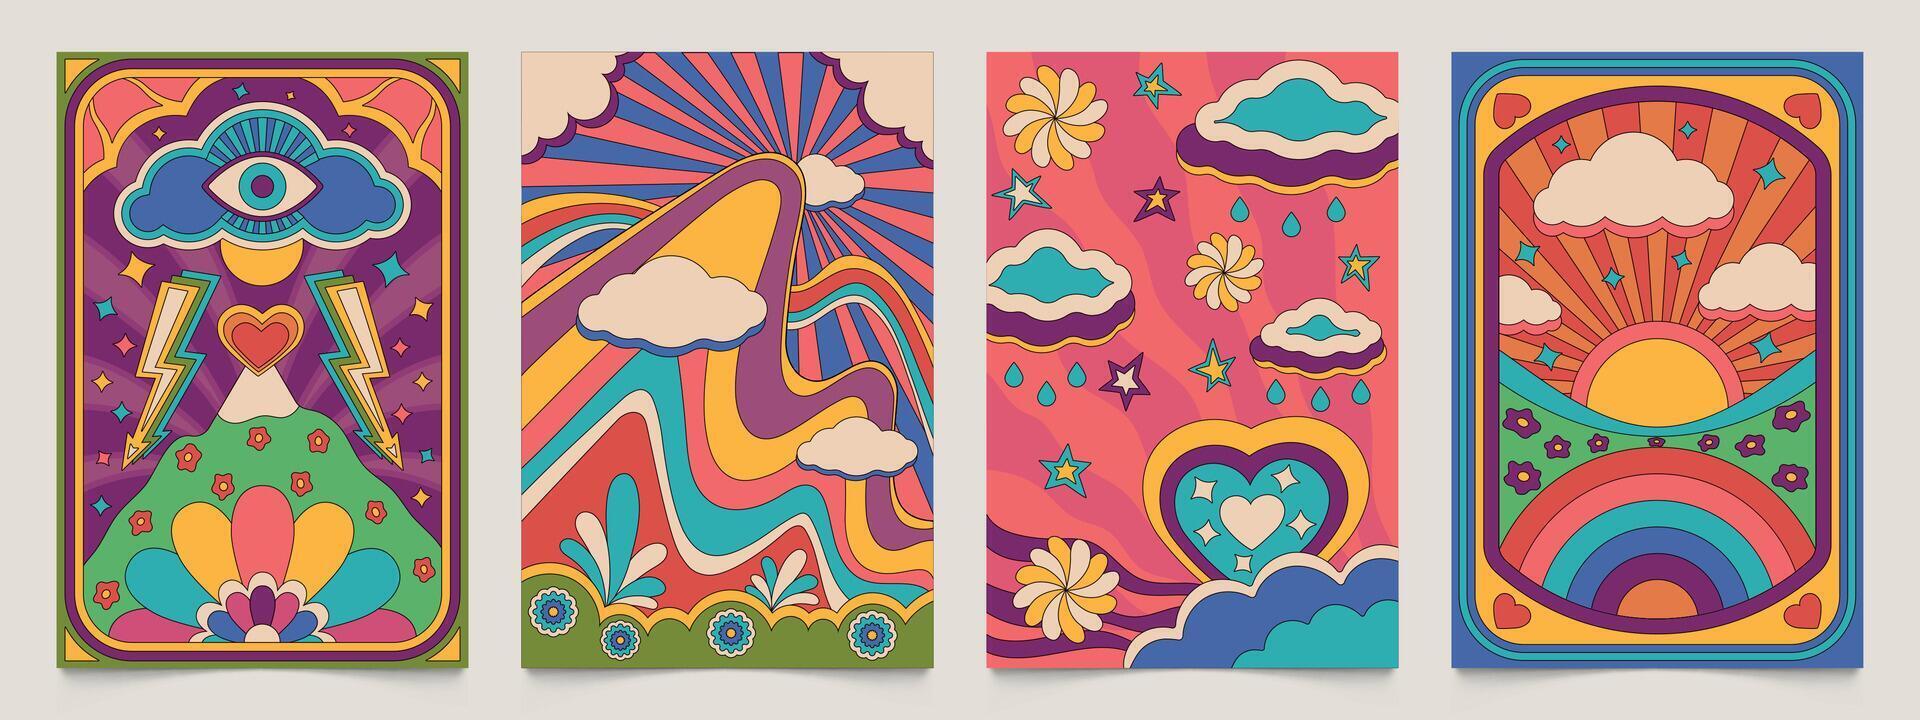 hippie cartazes. psicodélico retro papel de parede com floral camomila flores e plantas, floral decorativo Projeto Década de 1970 estilo. vetor abstrato vintage papel de parede